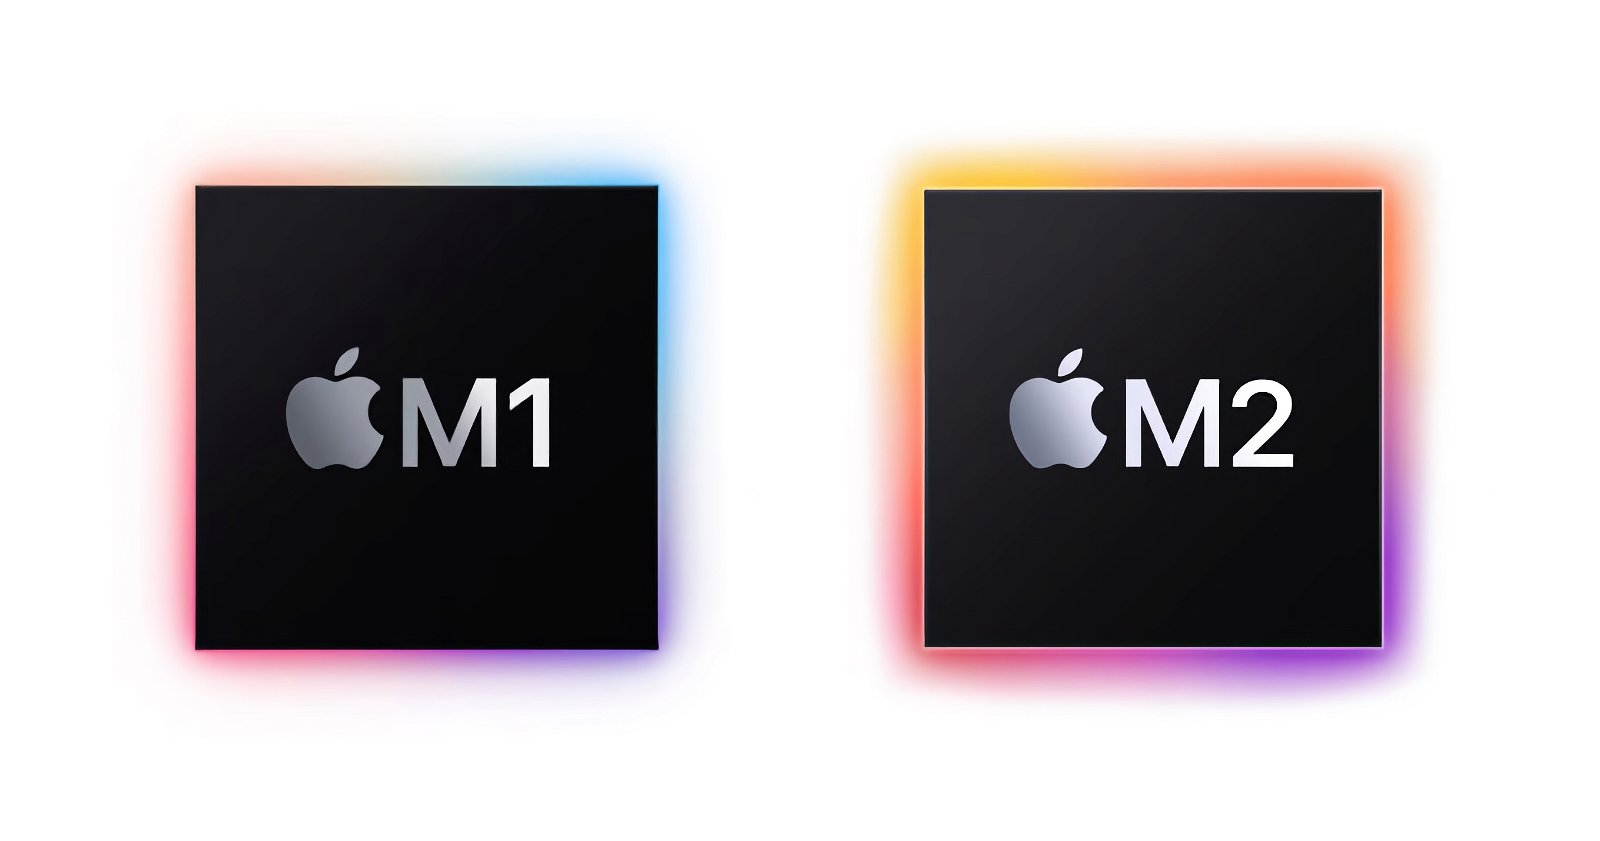 Messenger ya es compatible con chips M1 y M2 de Apple